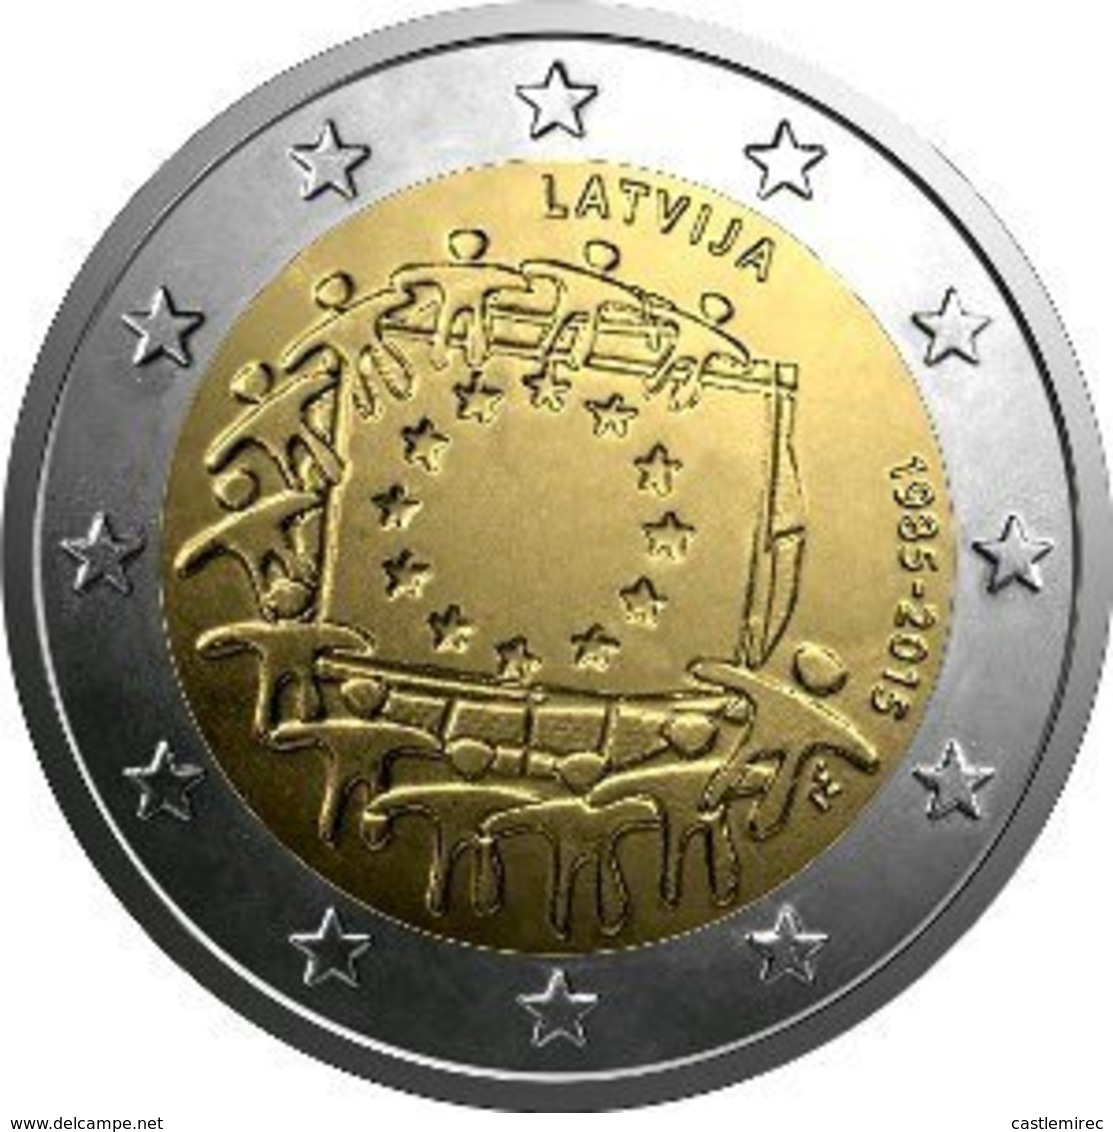 2 Euro UNC LATVIA 2015 (30th Anniversary Of The Flag Of Europe) - Latvia